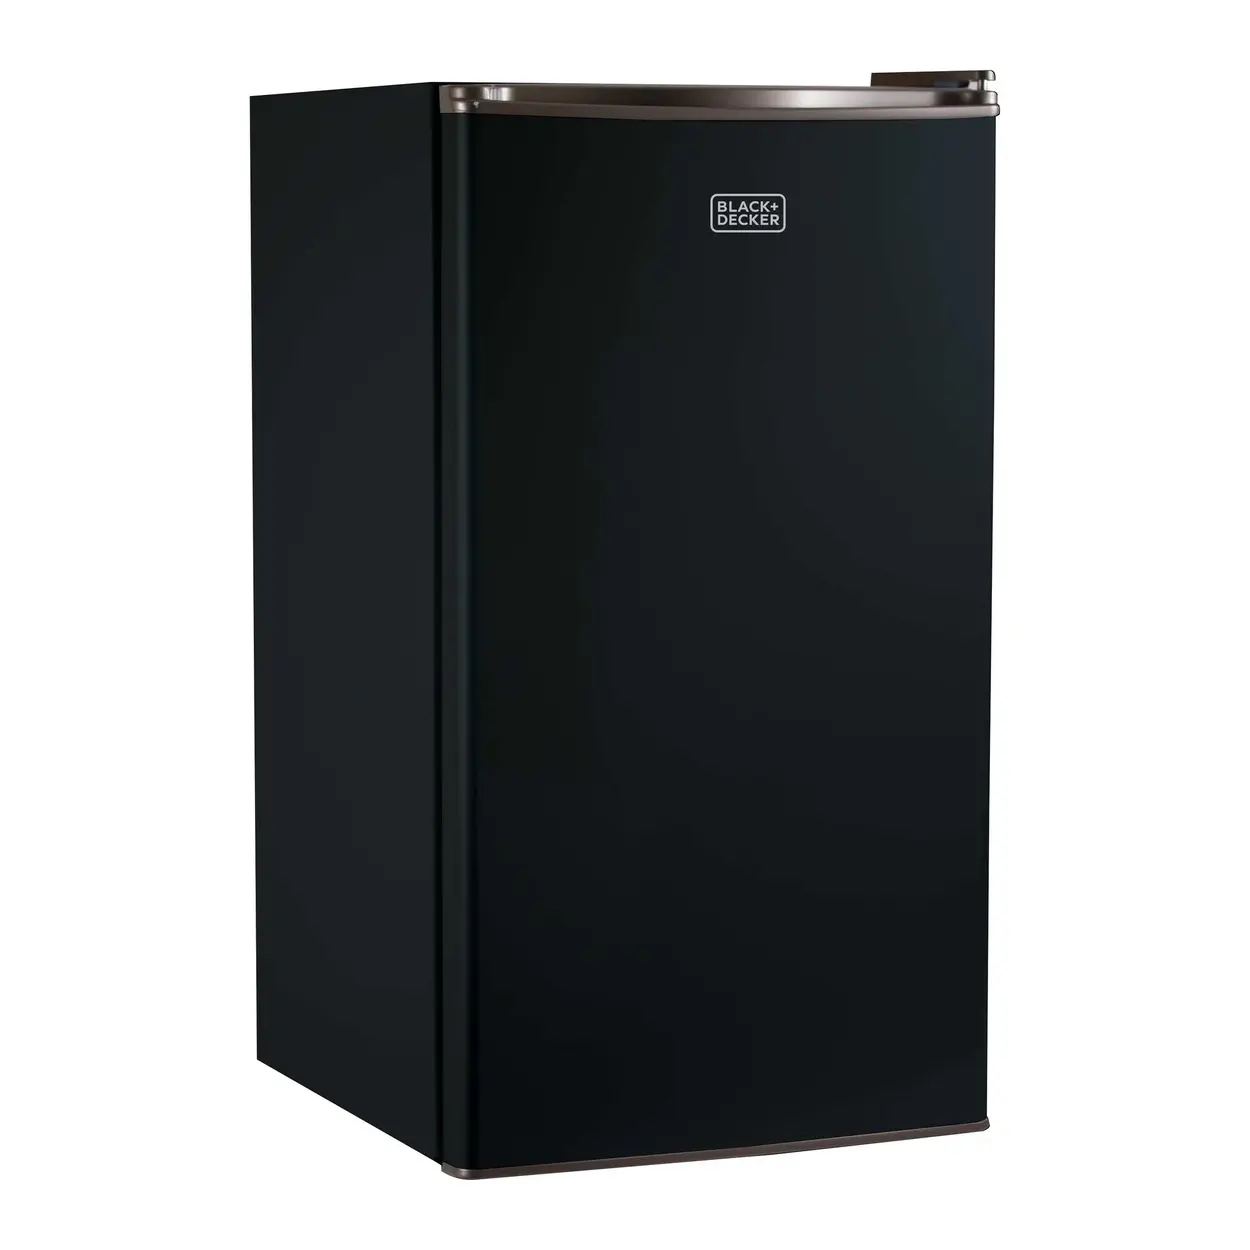 BLACK+DECKER Compact Refrigerator.